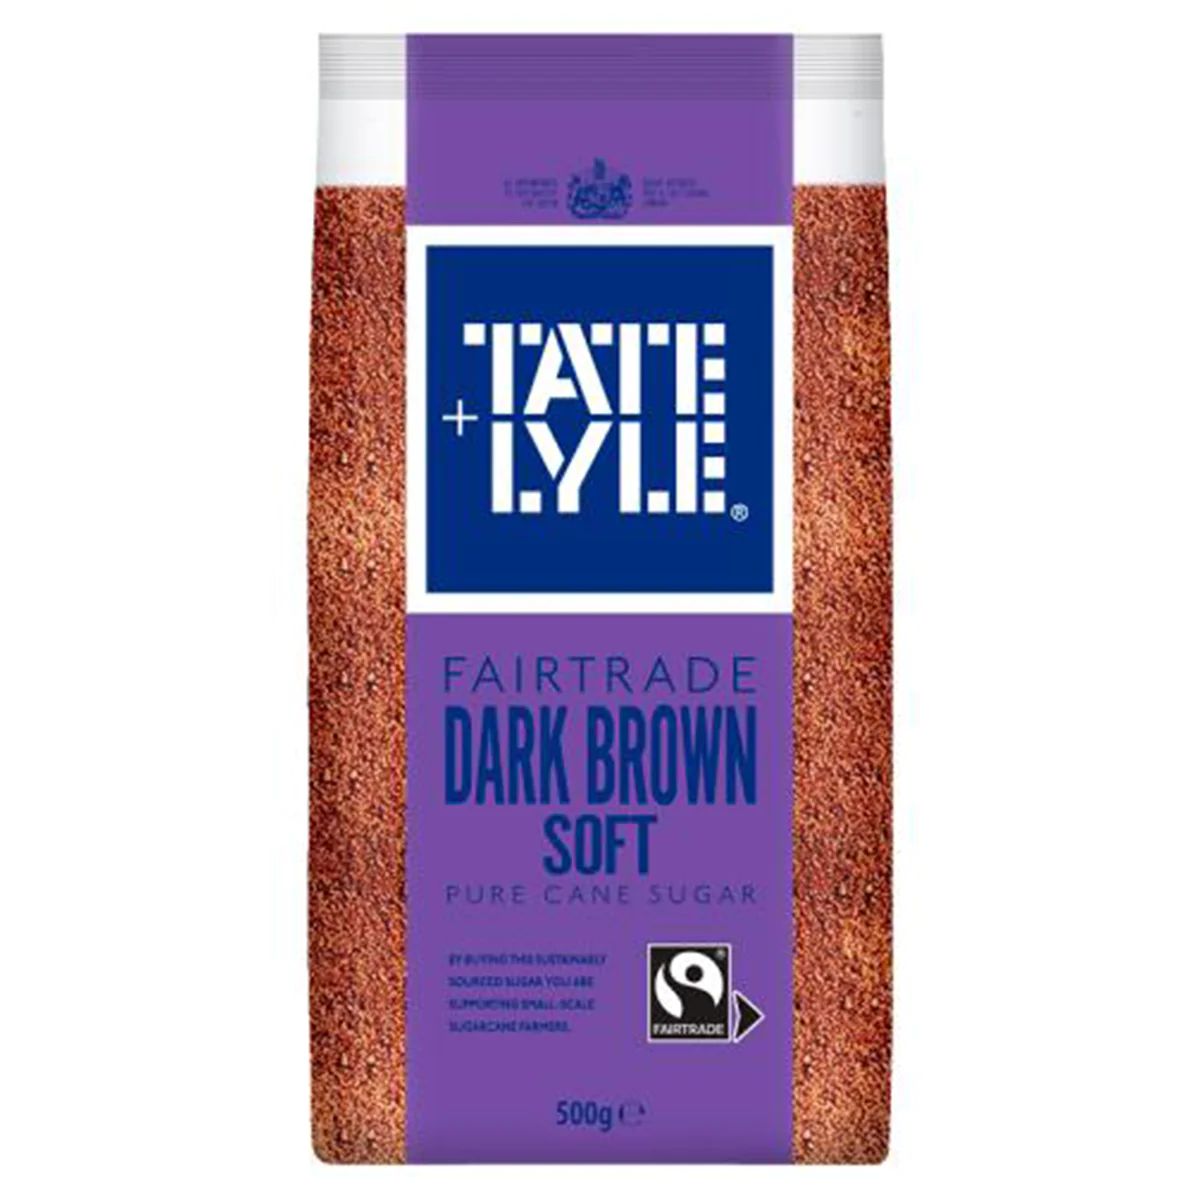 A package of Tate & Lyle - Fairtrade Dark Brown Soft Sugar, weighing 500 grams.